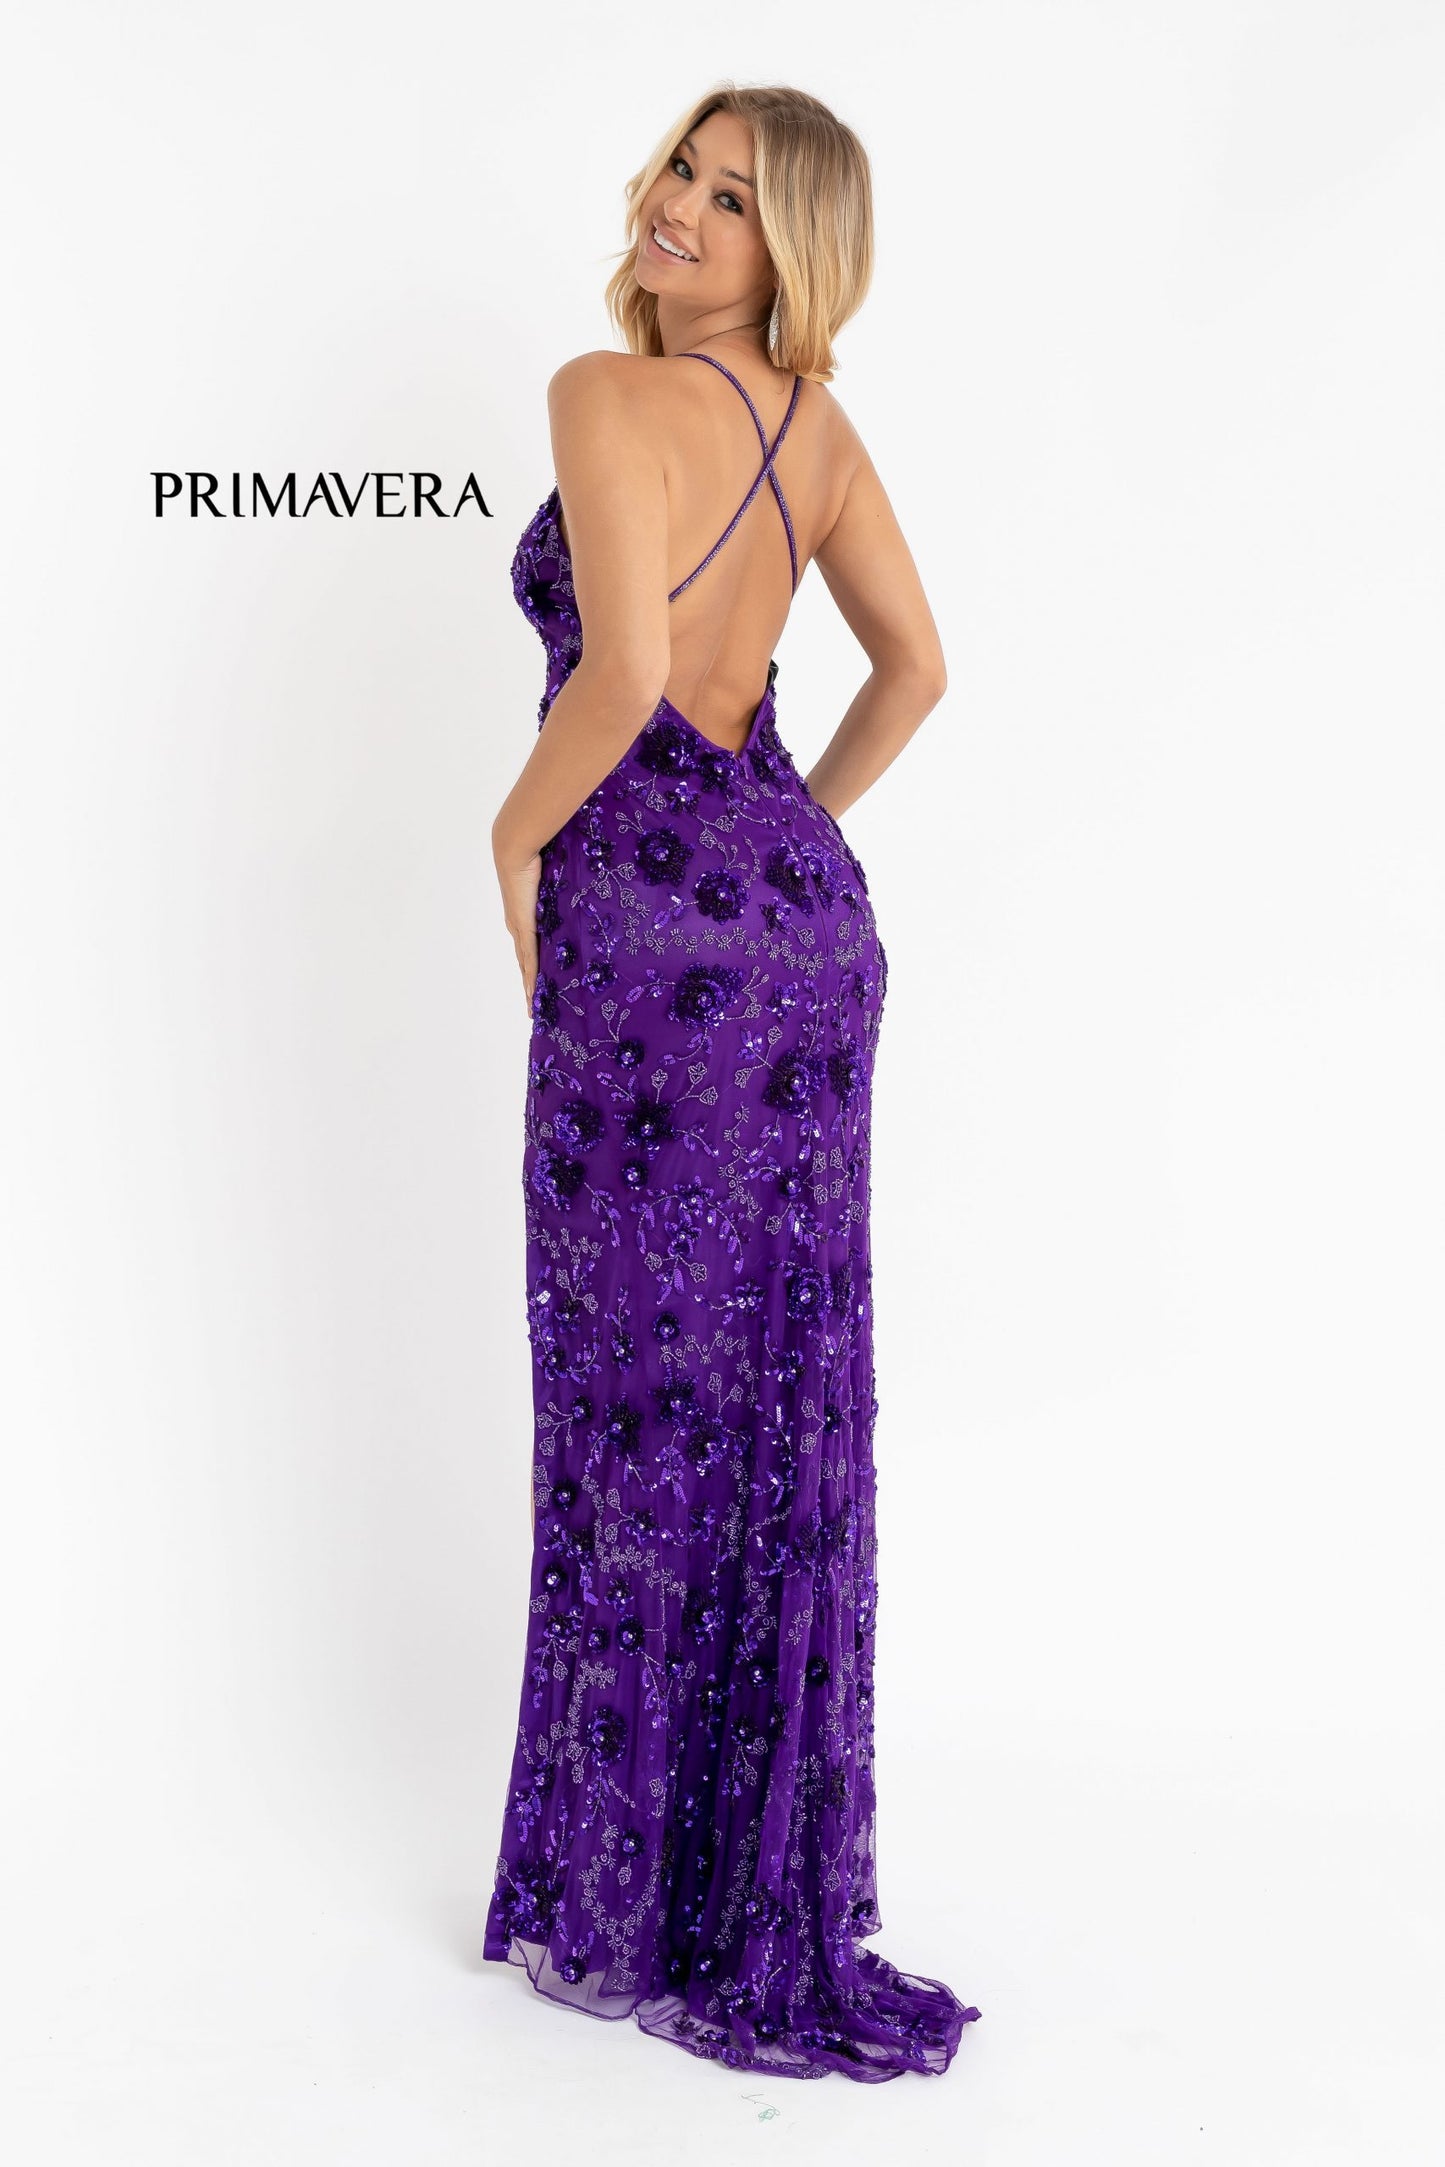 Primavera Couture 3731 Size 0 3D Flowers Prom Dress Sequins with a V Neckline Slit Open Back